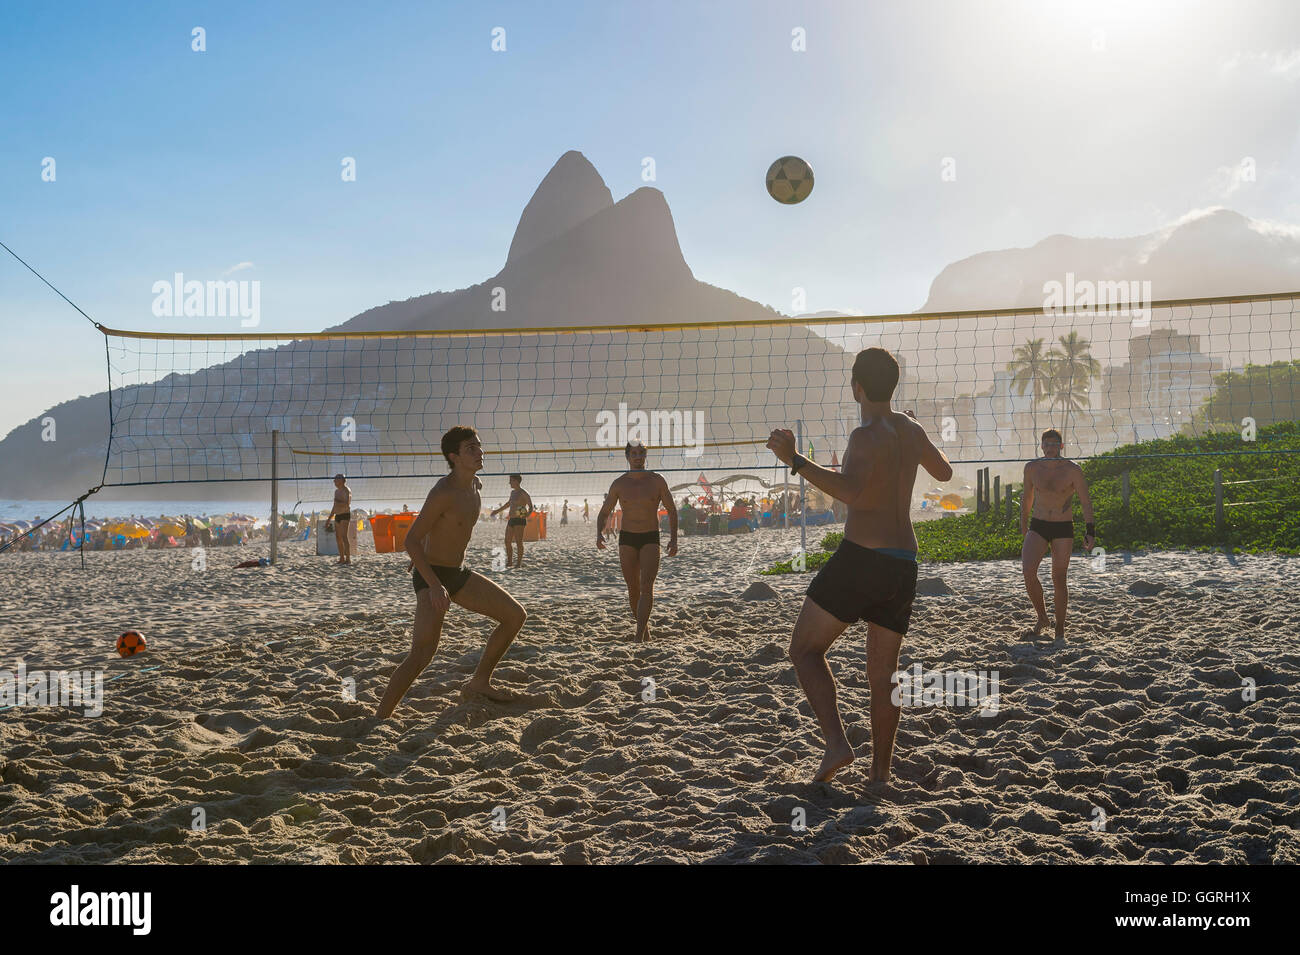 RIO DE JANEIRO - MARCH 27, 2016: Young carioca Brazilians play futevôlei (footvolley, combining football/soccer and volleyball). Stock Photo